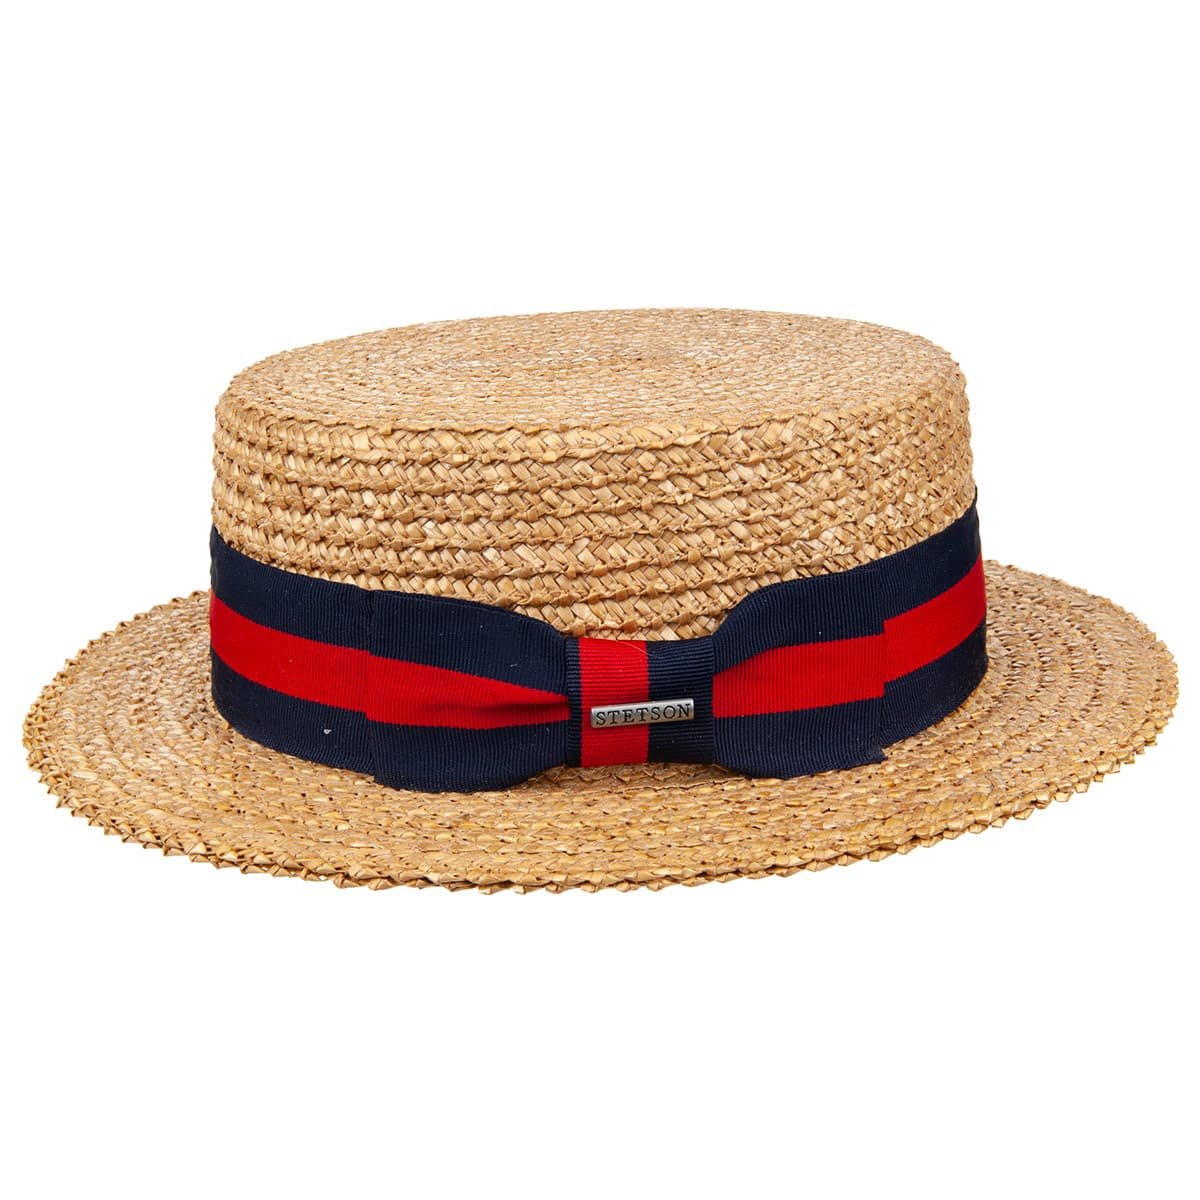 Stetson Boater Whear Straw Hat Online Hatshop For Hats Caps